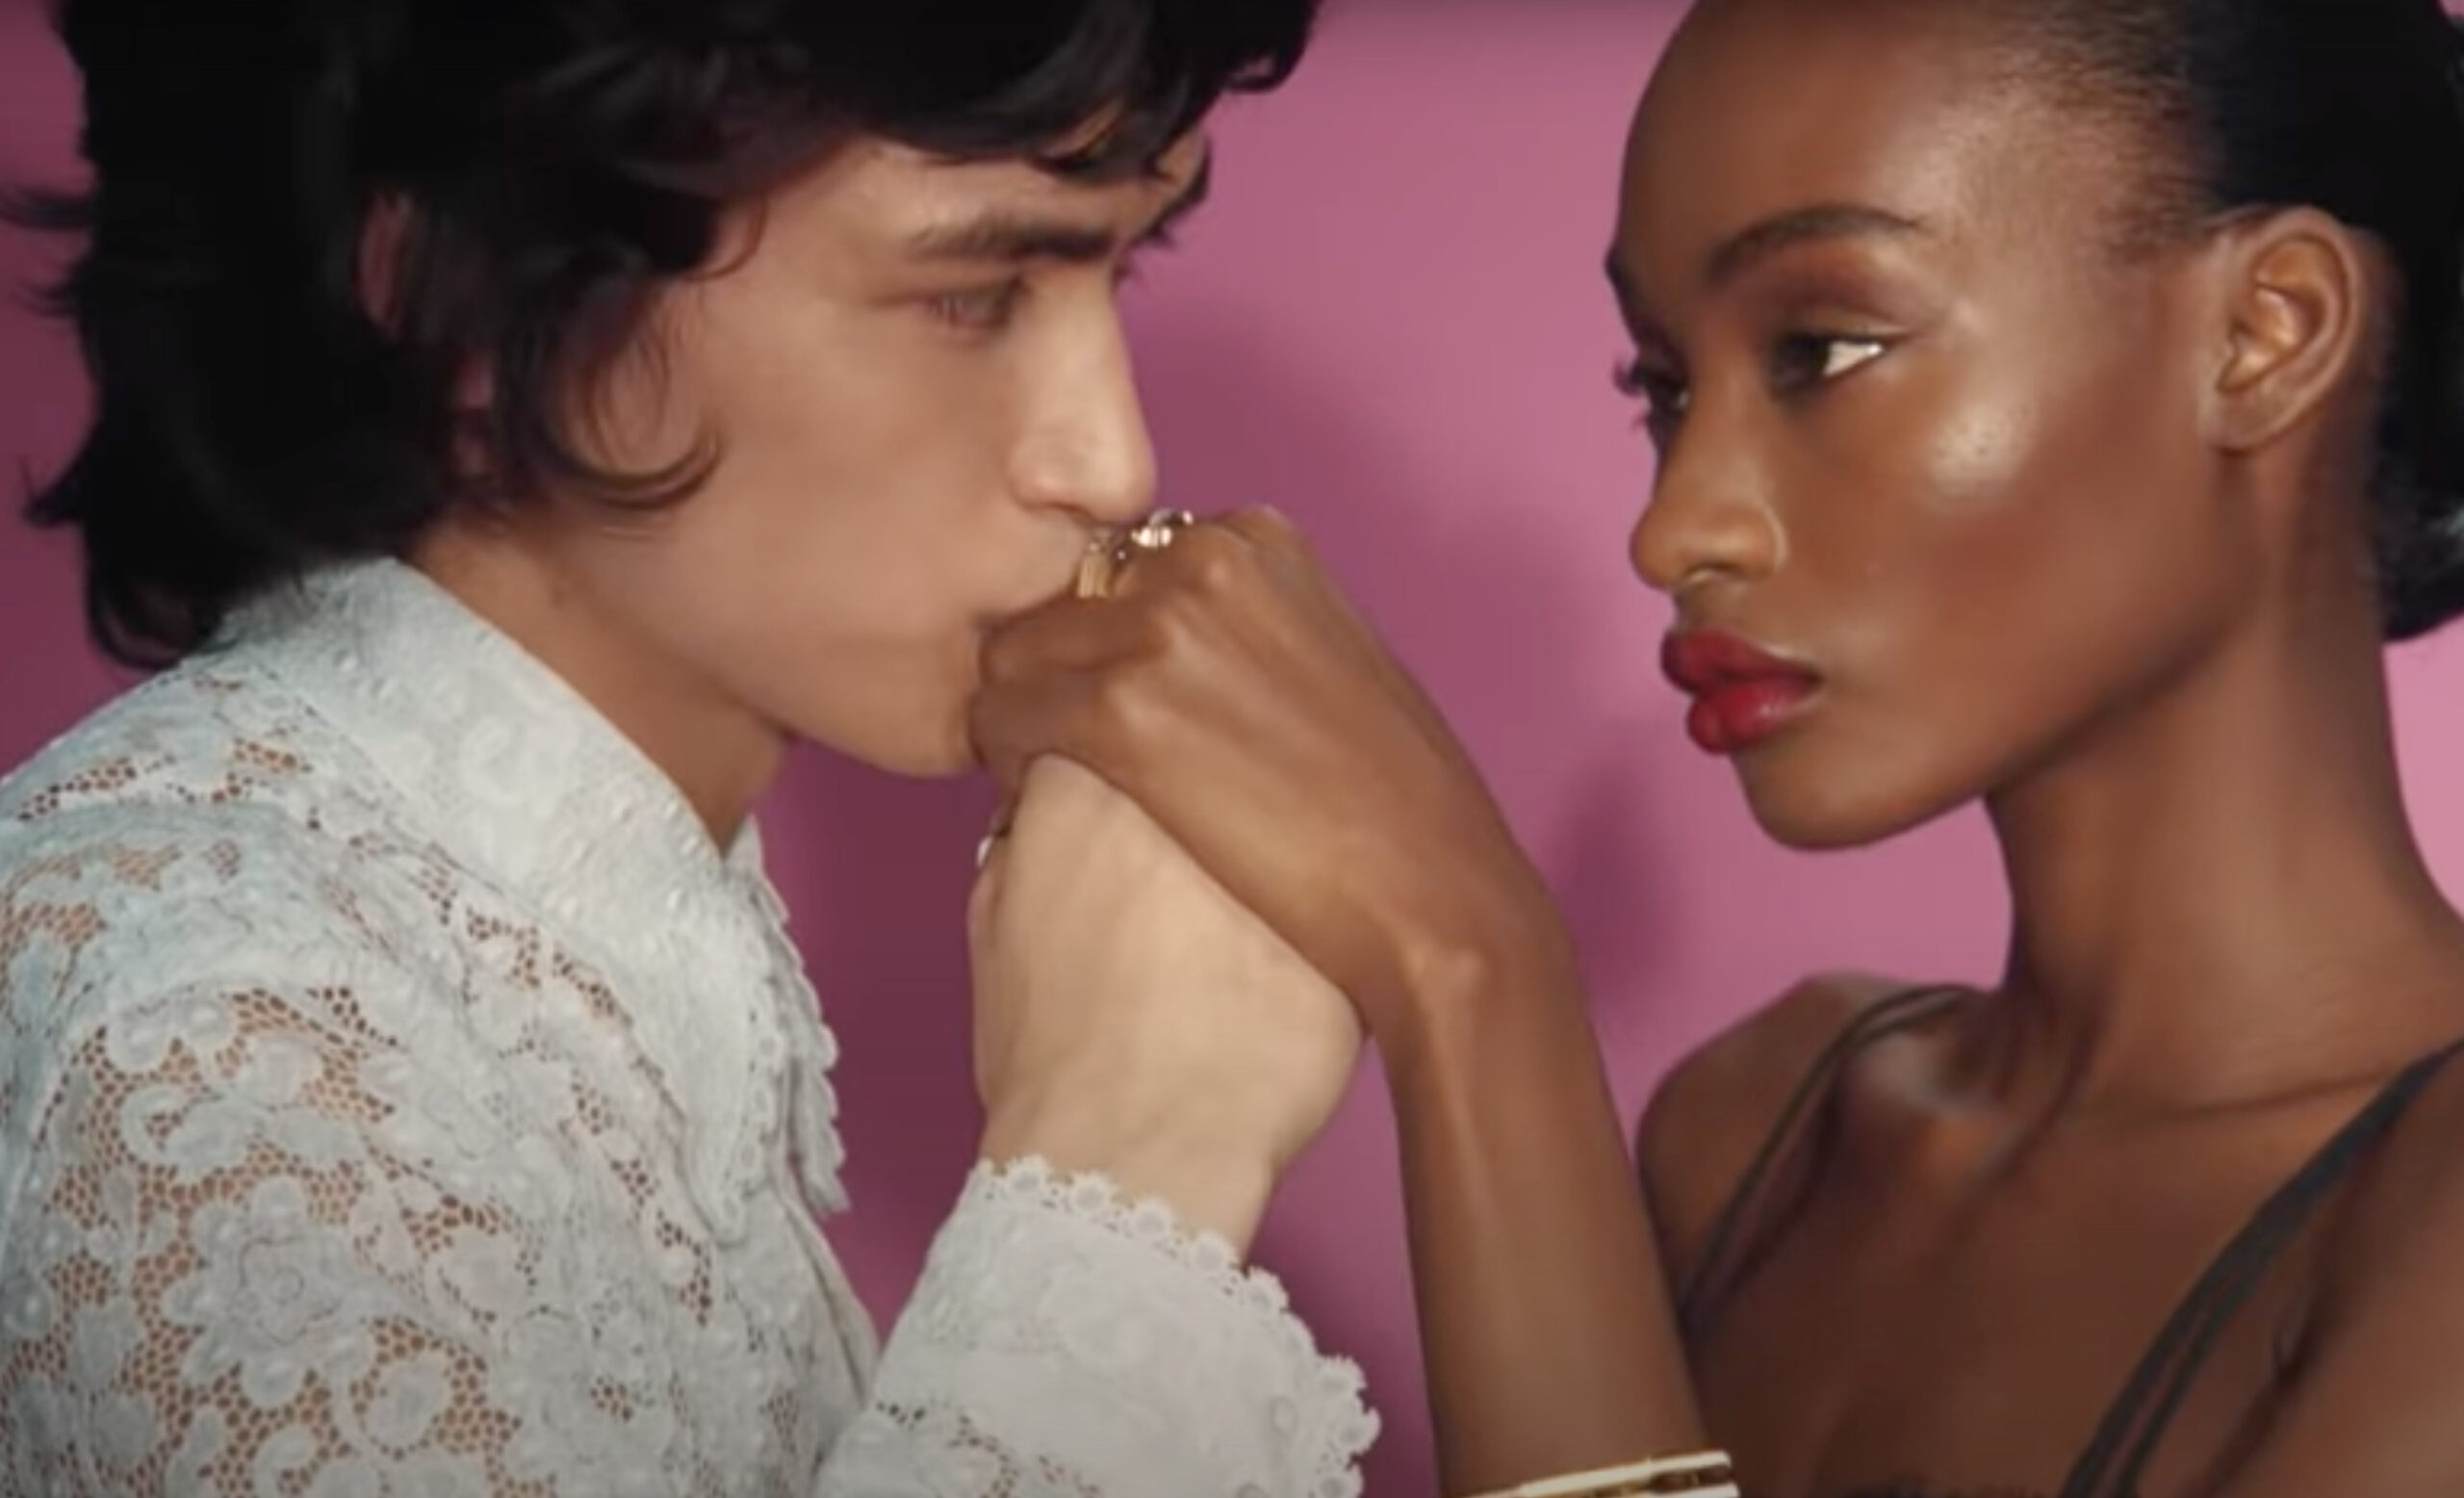 Gucci — Gucci Link to Love Campaign Film | The Fashionography